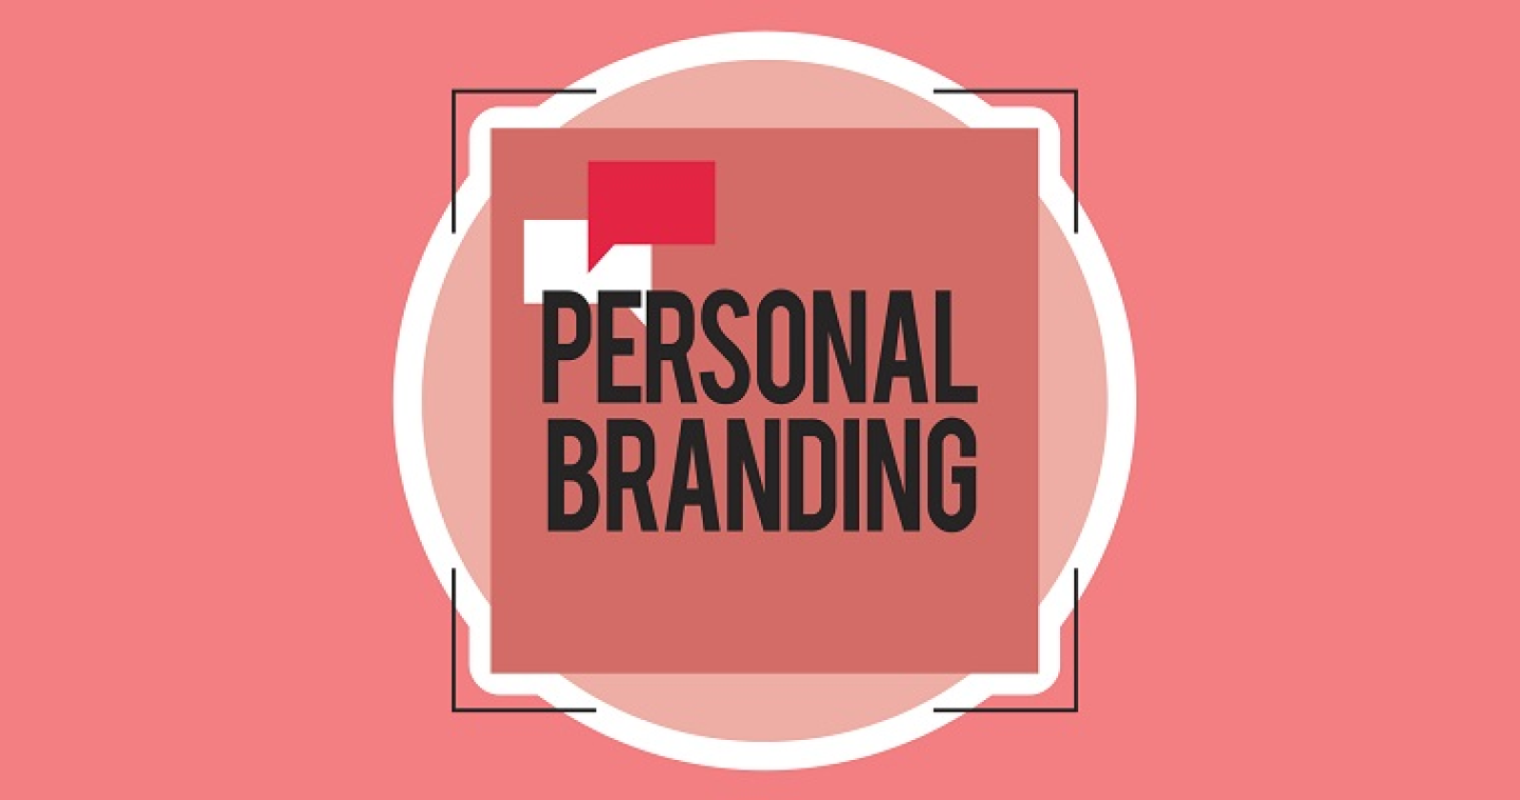 How important is self-branding?